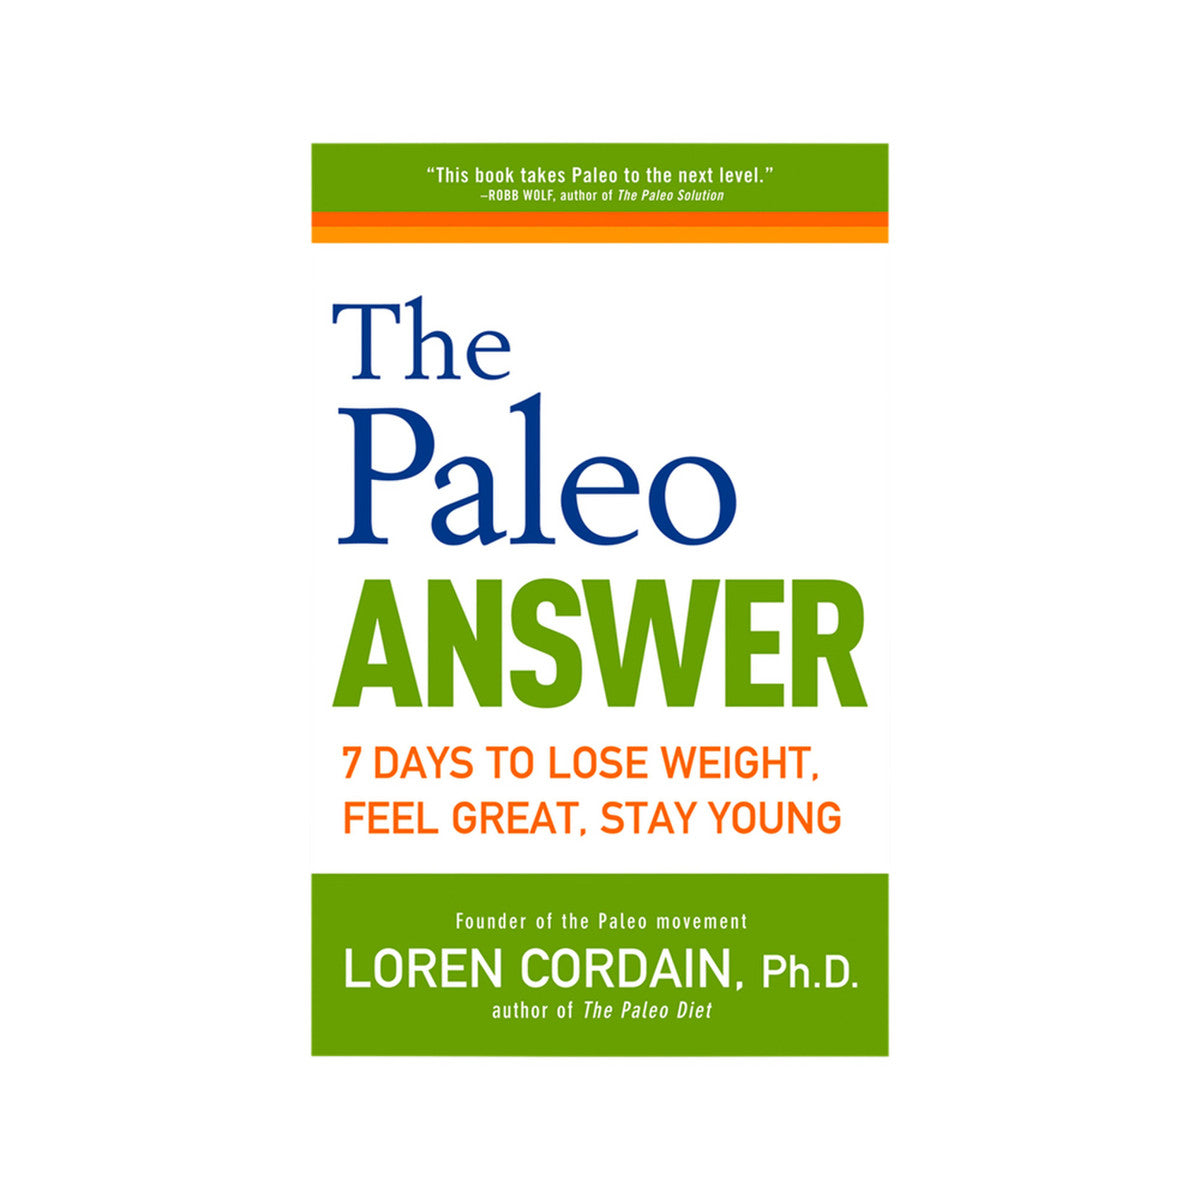 The Paleo Answer by Loren Cordain